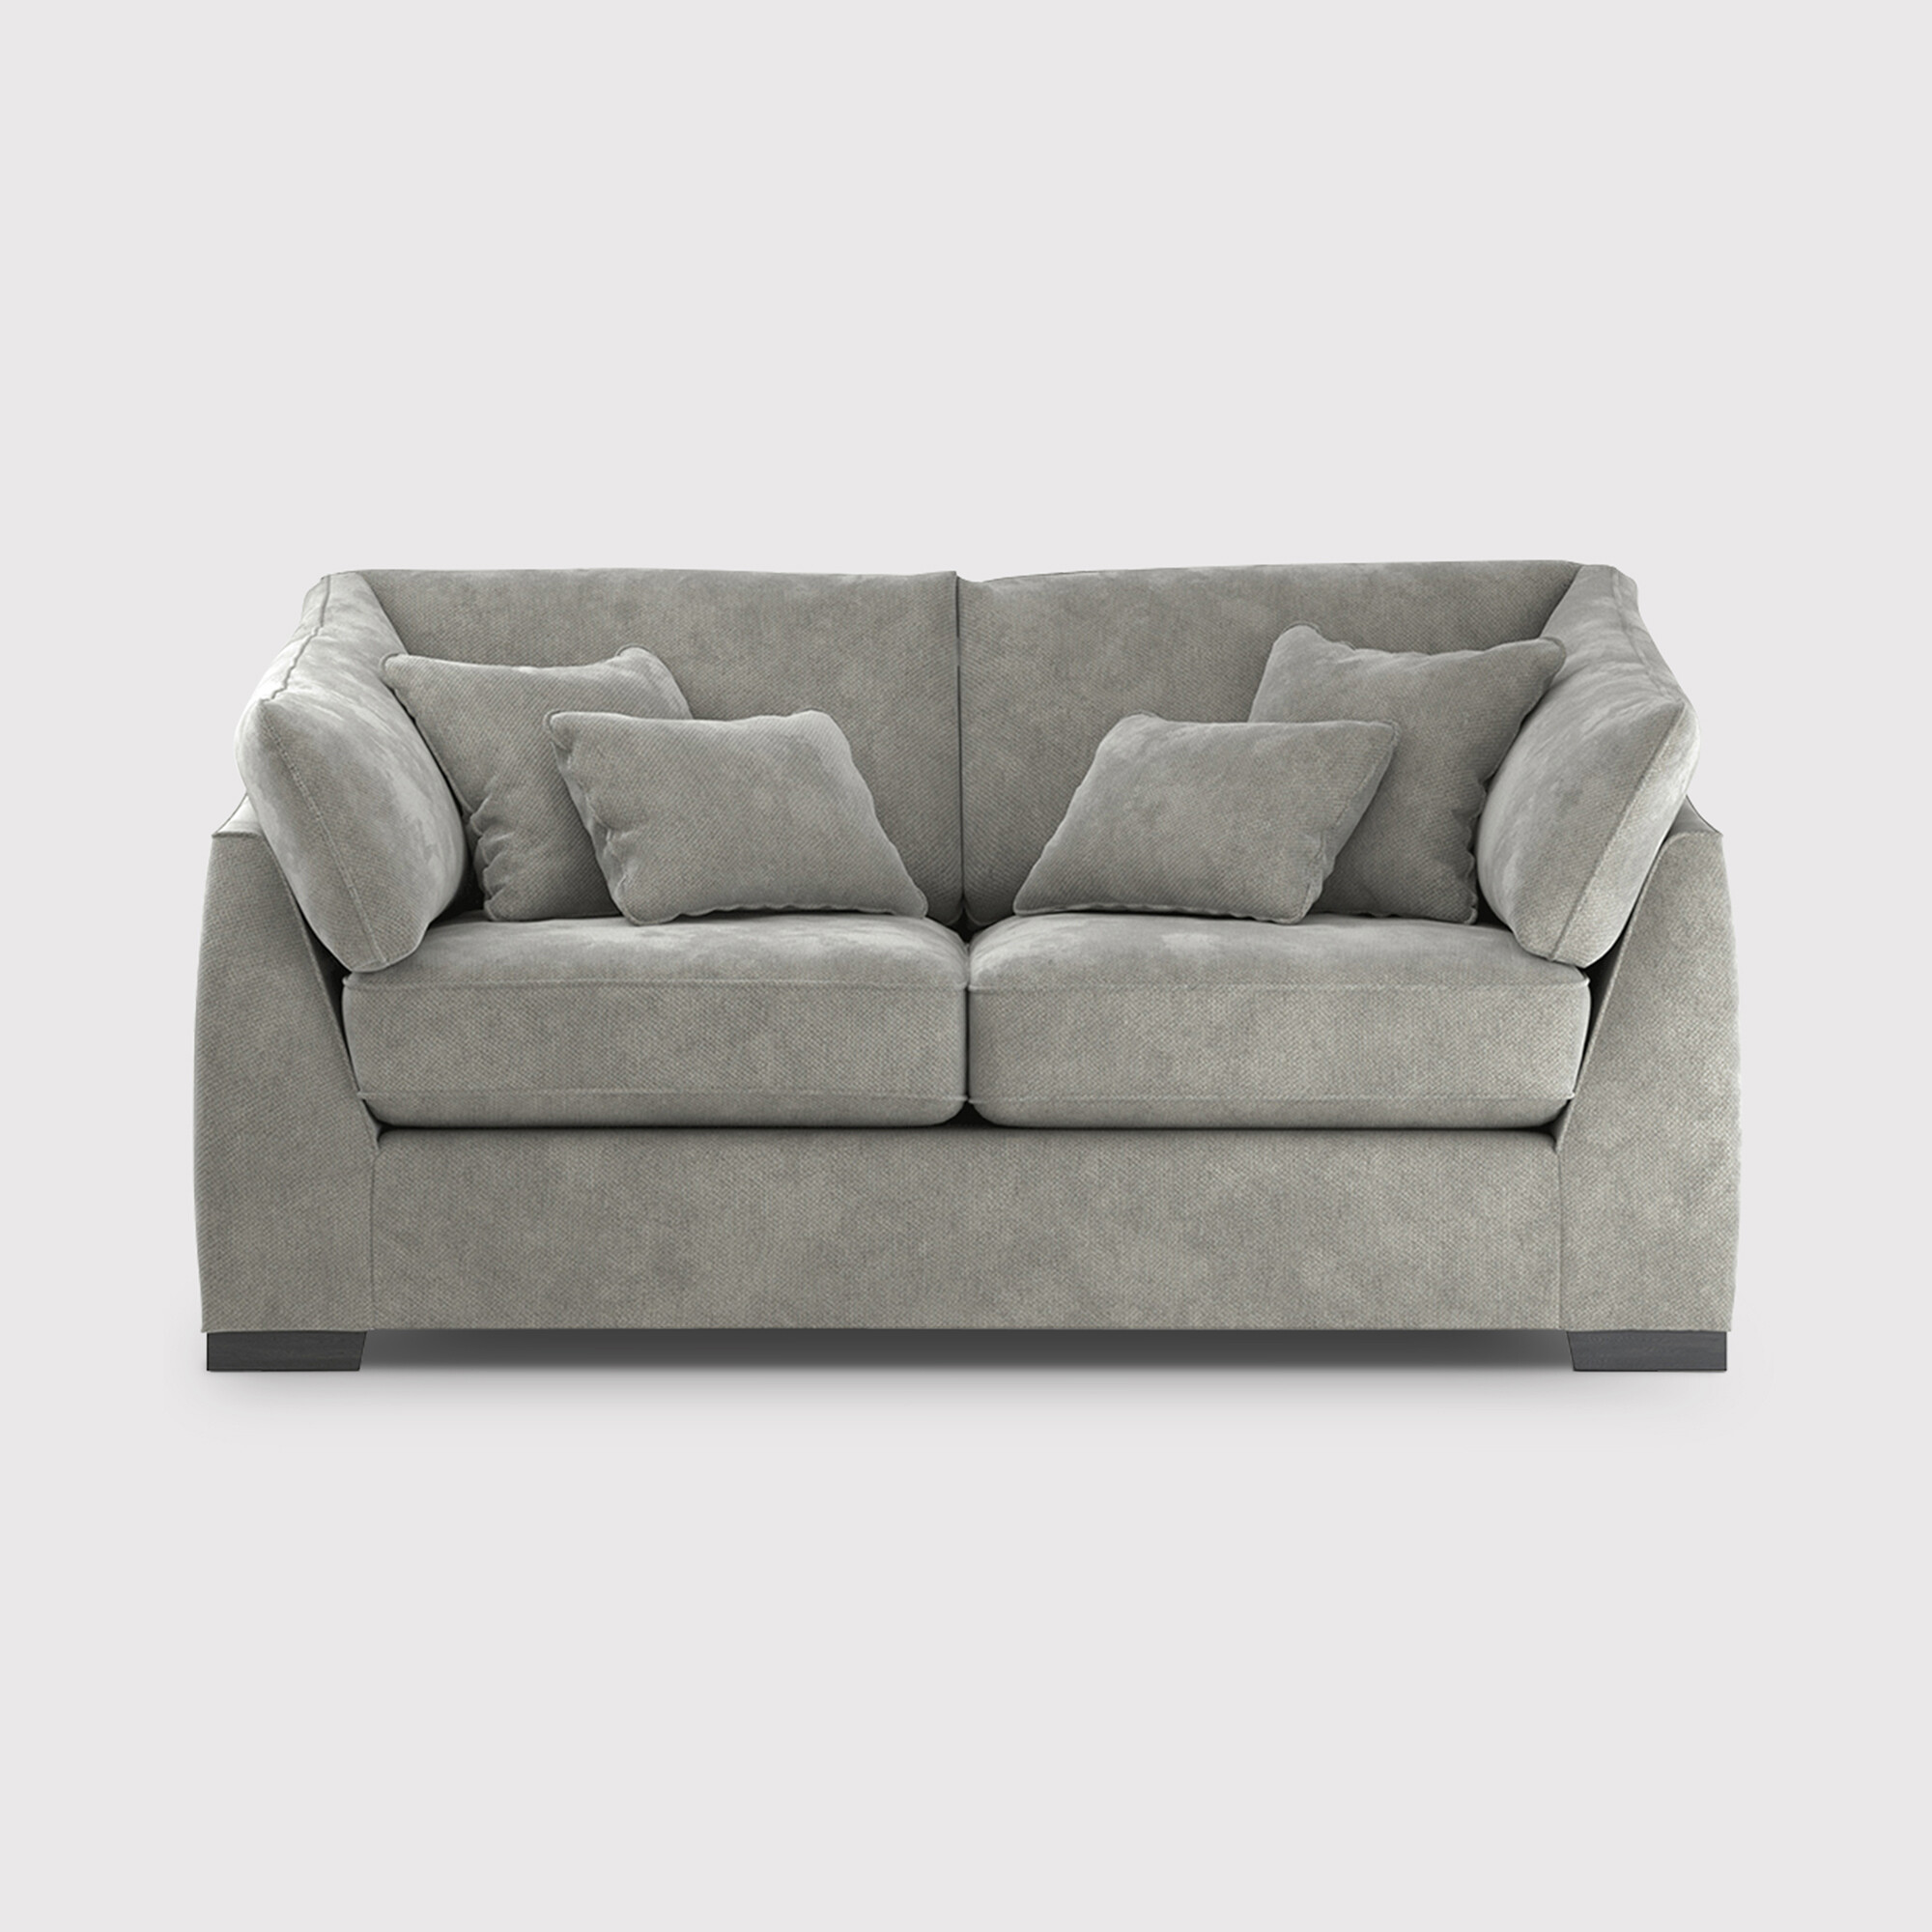 Borelly 2 Seater Sofa, Grey Fabric | Barker & Stonehouse